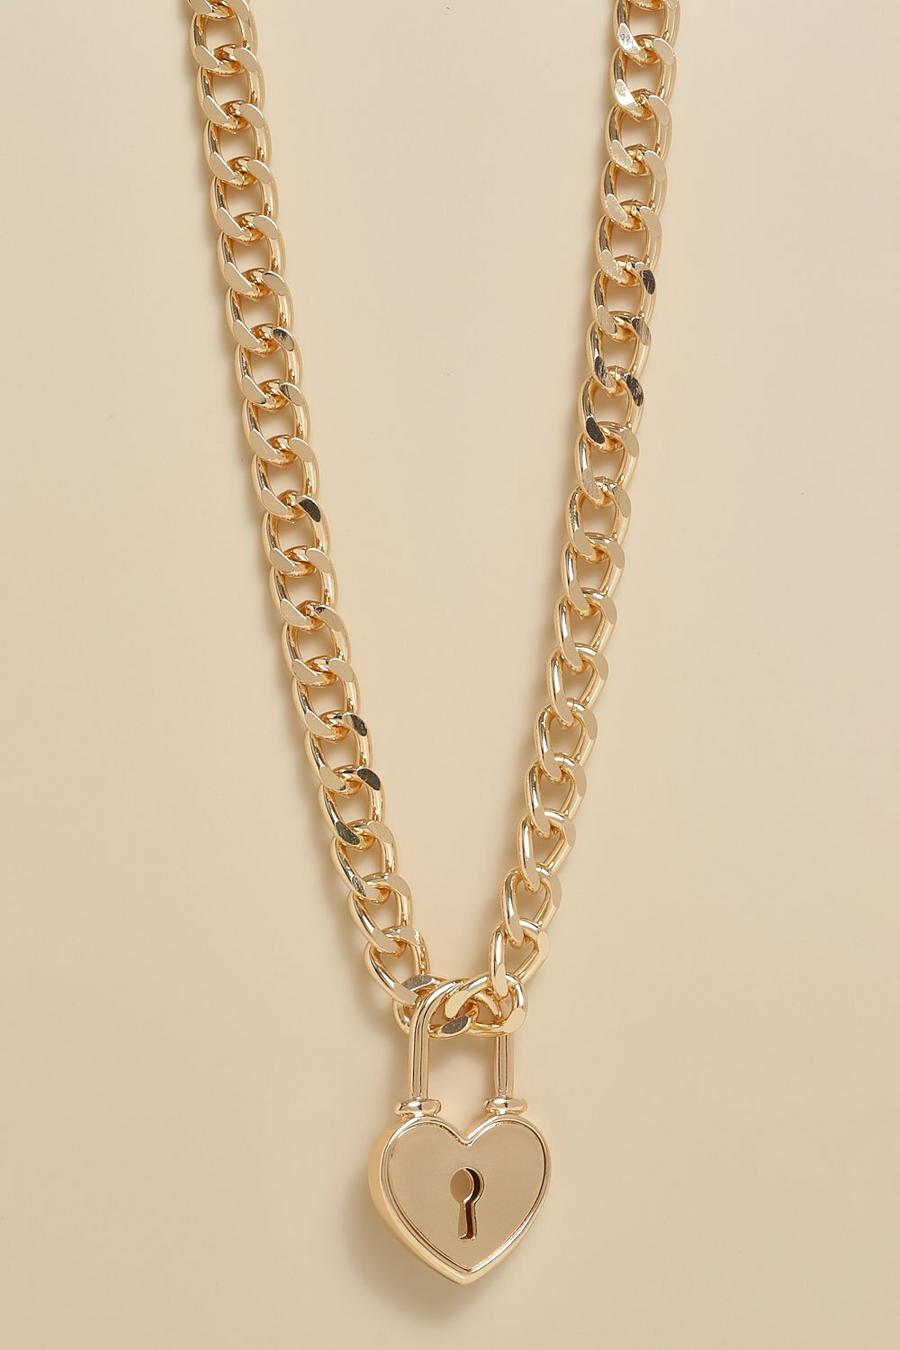 Chunky lock chain necklace - streetwear inspired jewellery